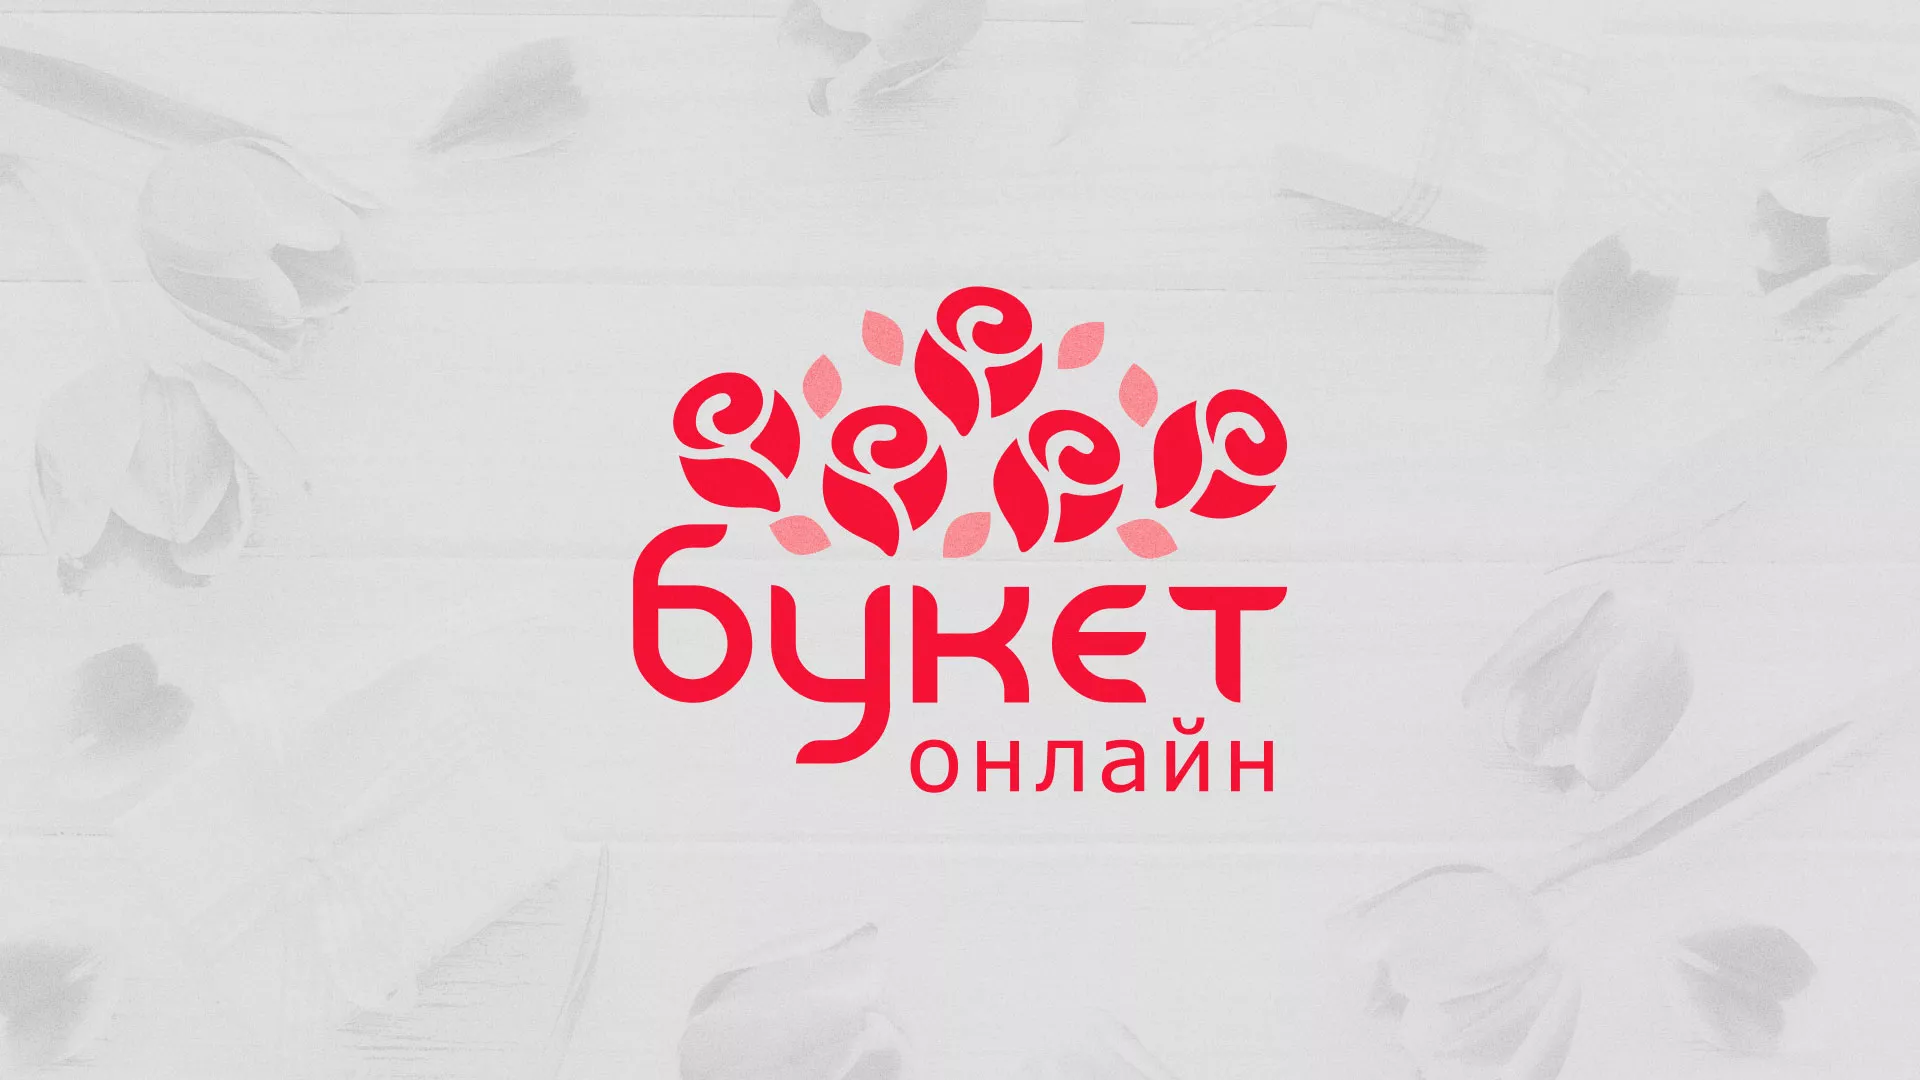 Создание интернет-магазина «Букет-онлайн» по цветам в Катав-Ивановске